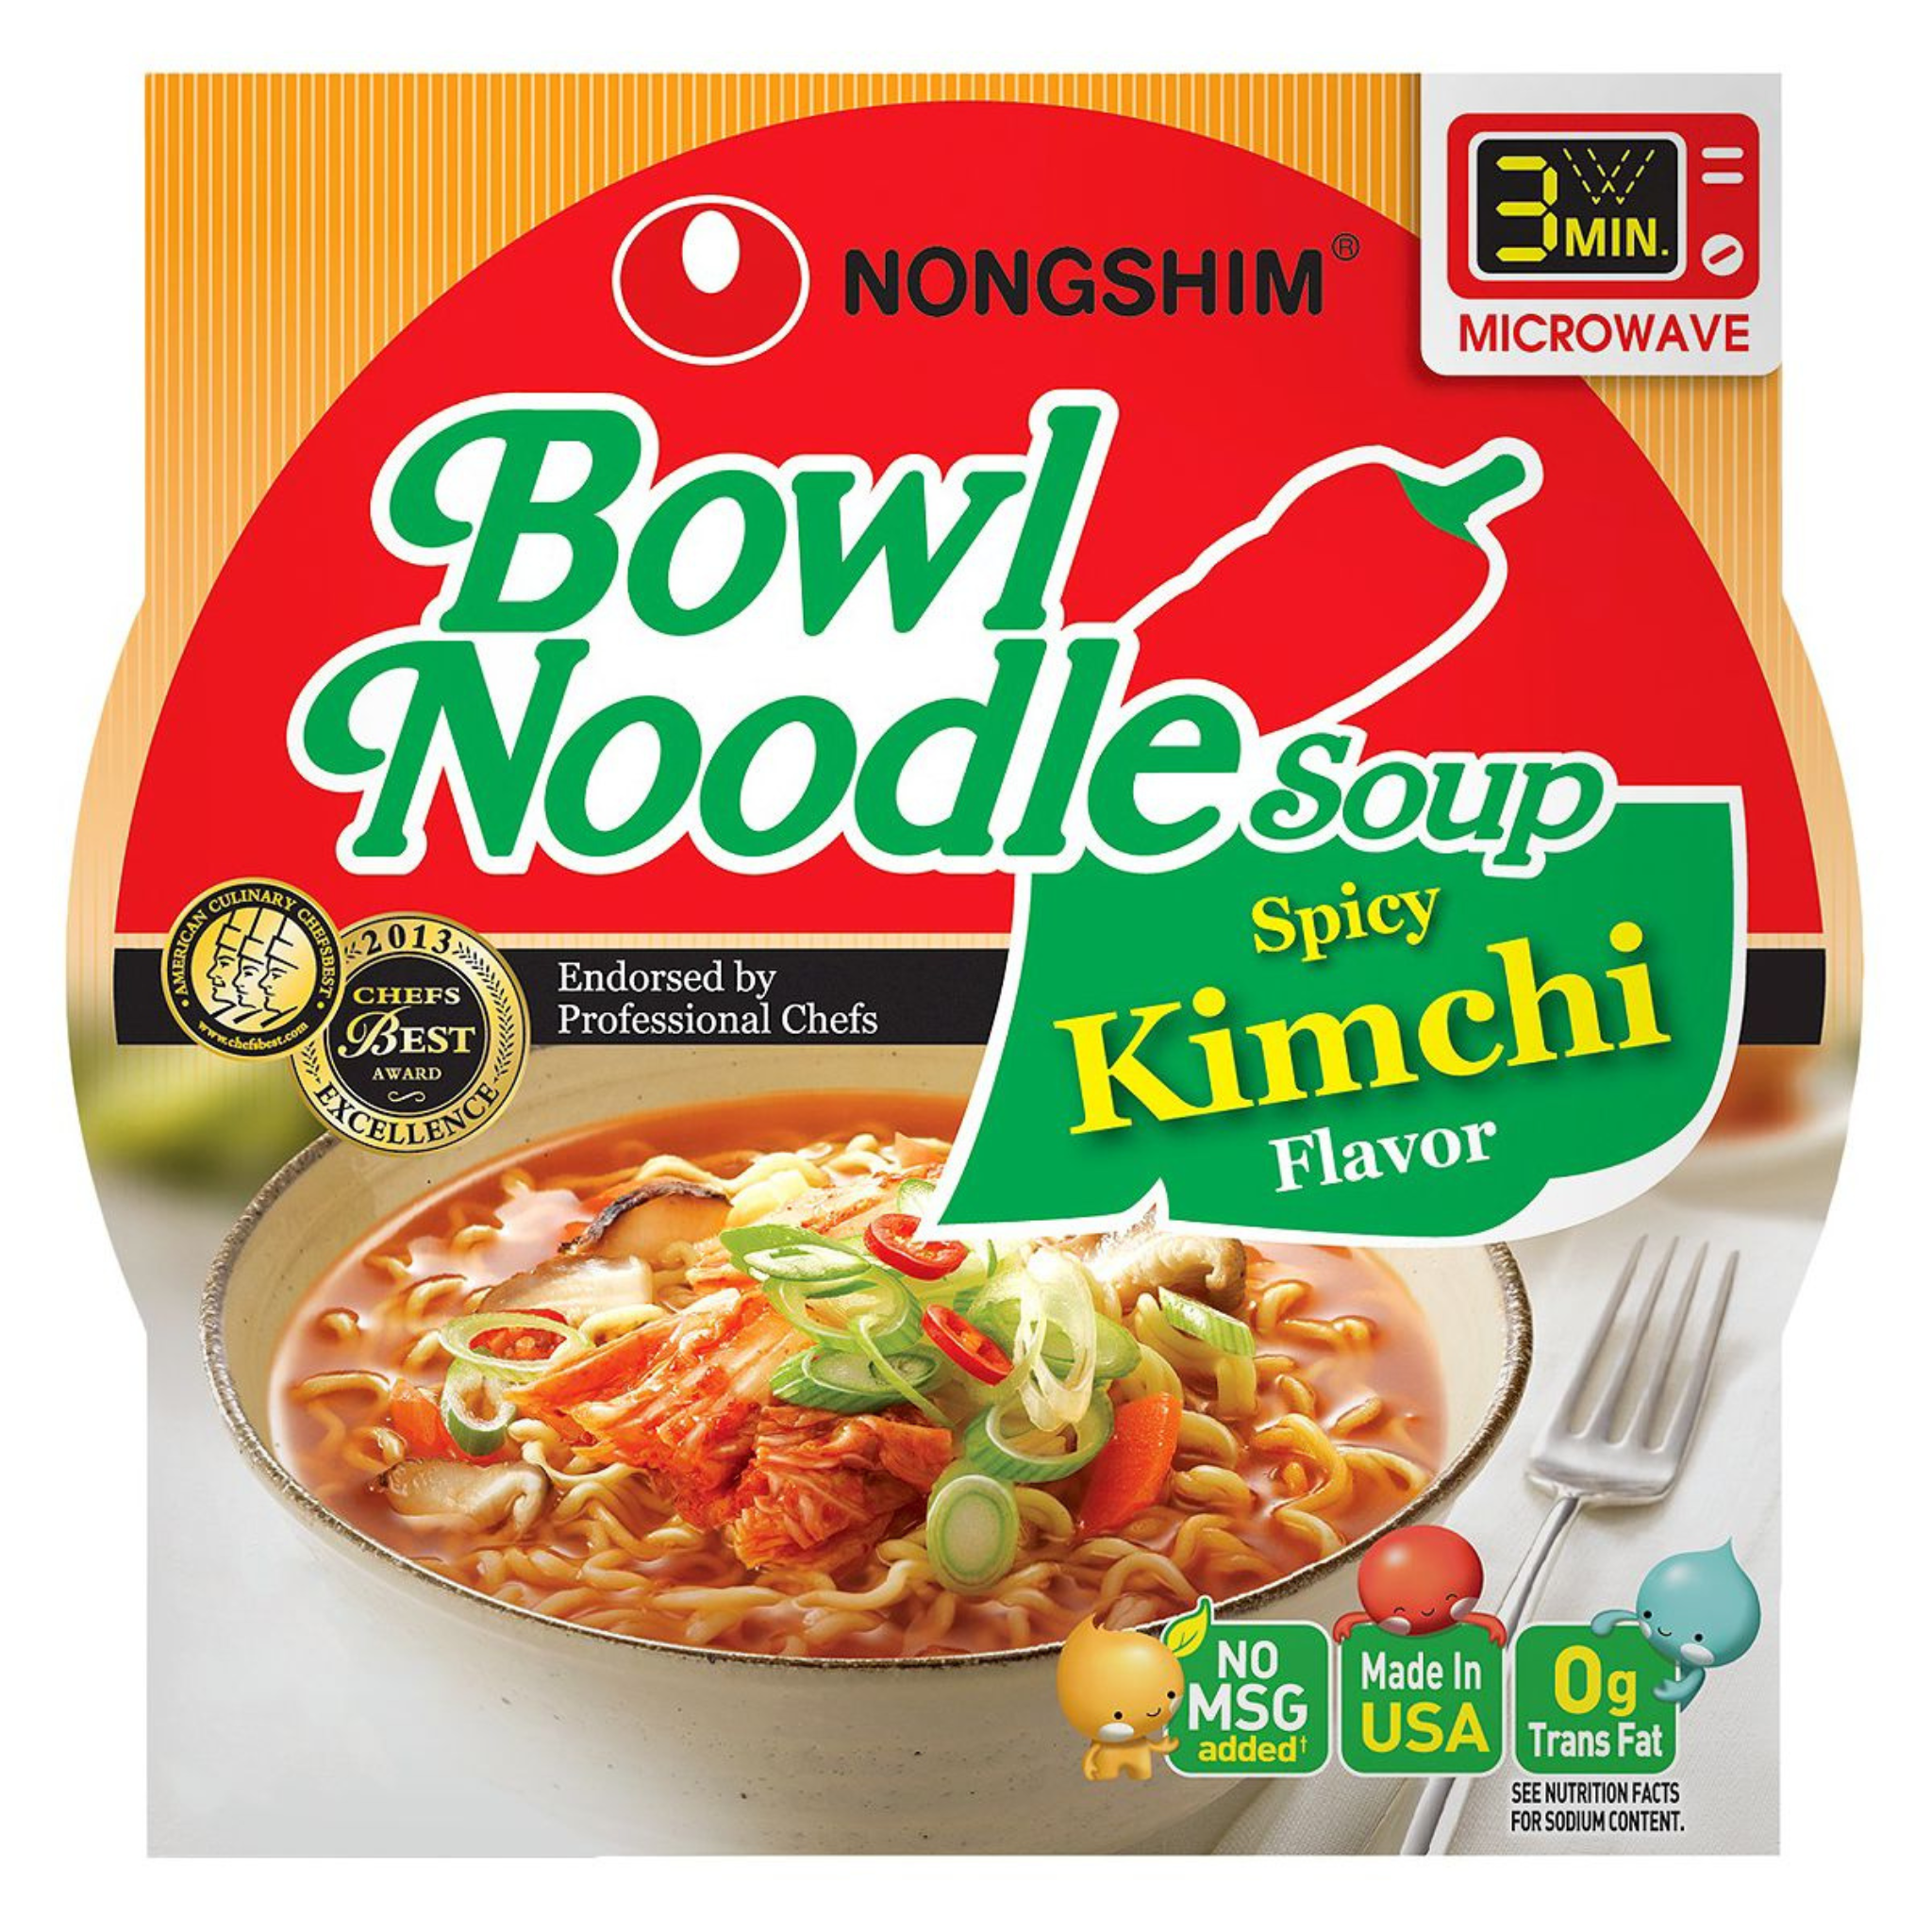 Nongshim Spicy Kimchi Bowl Noodles